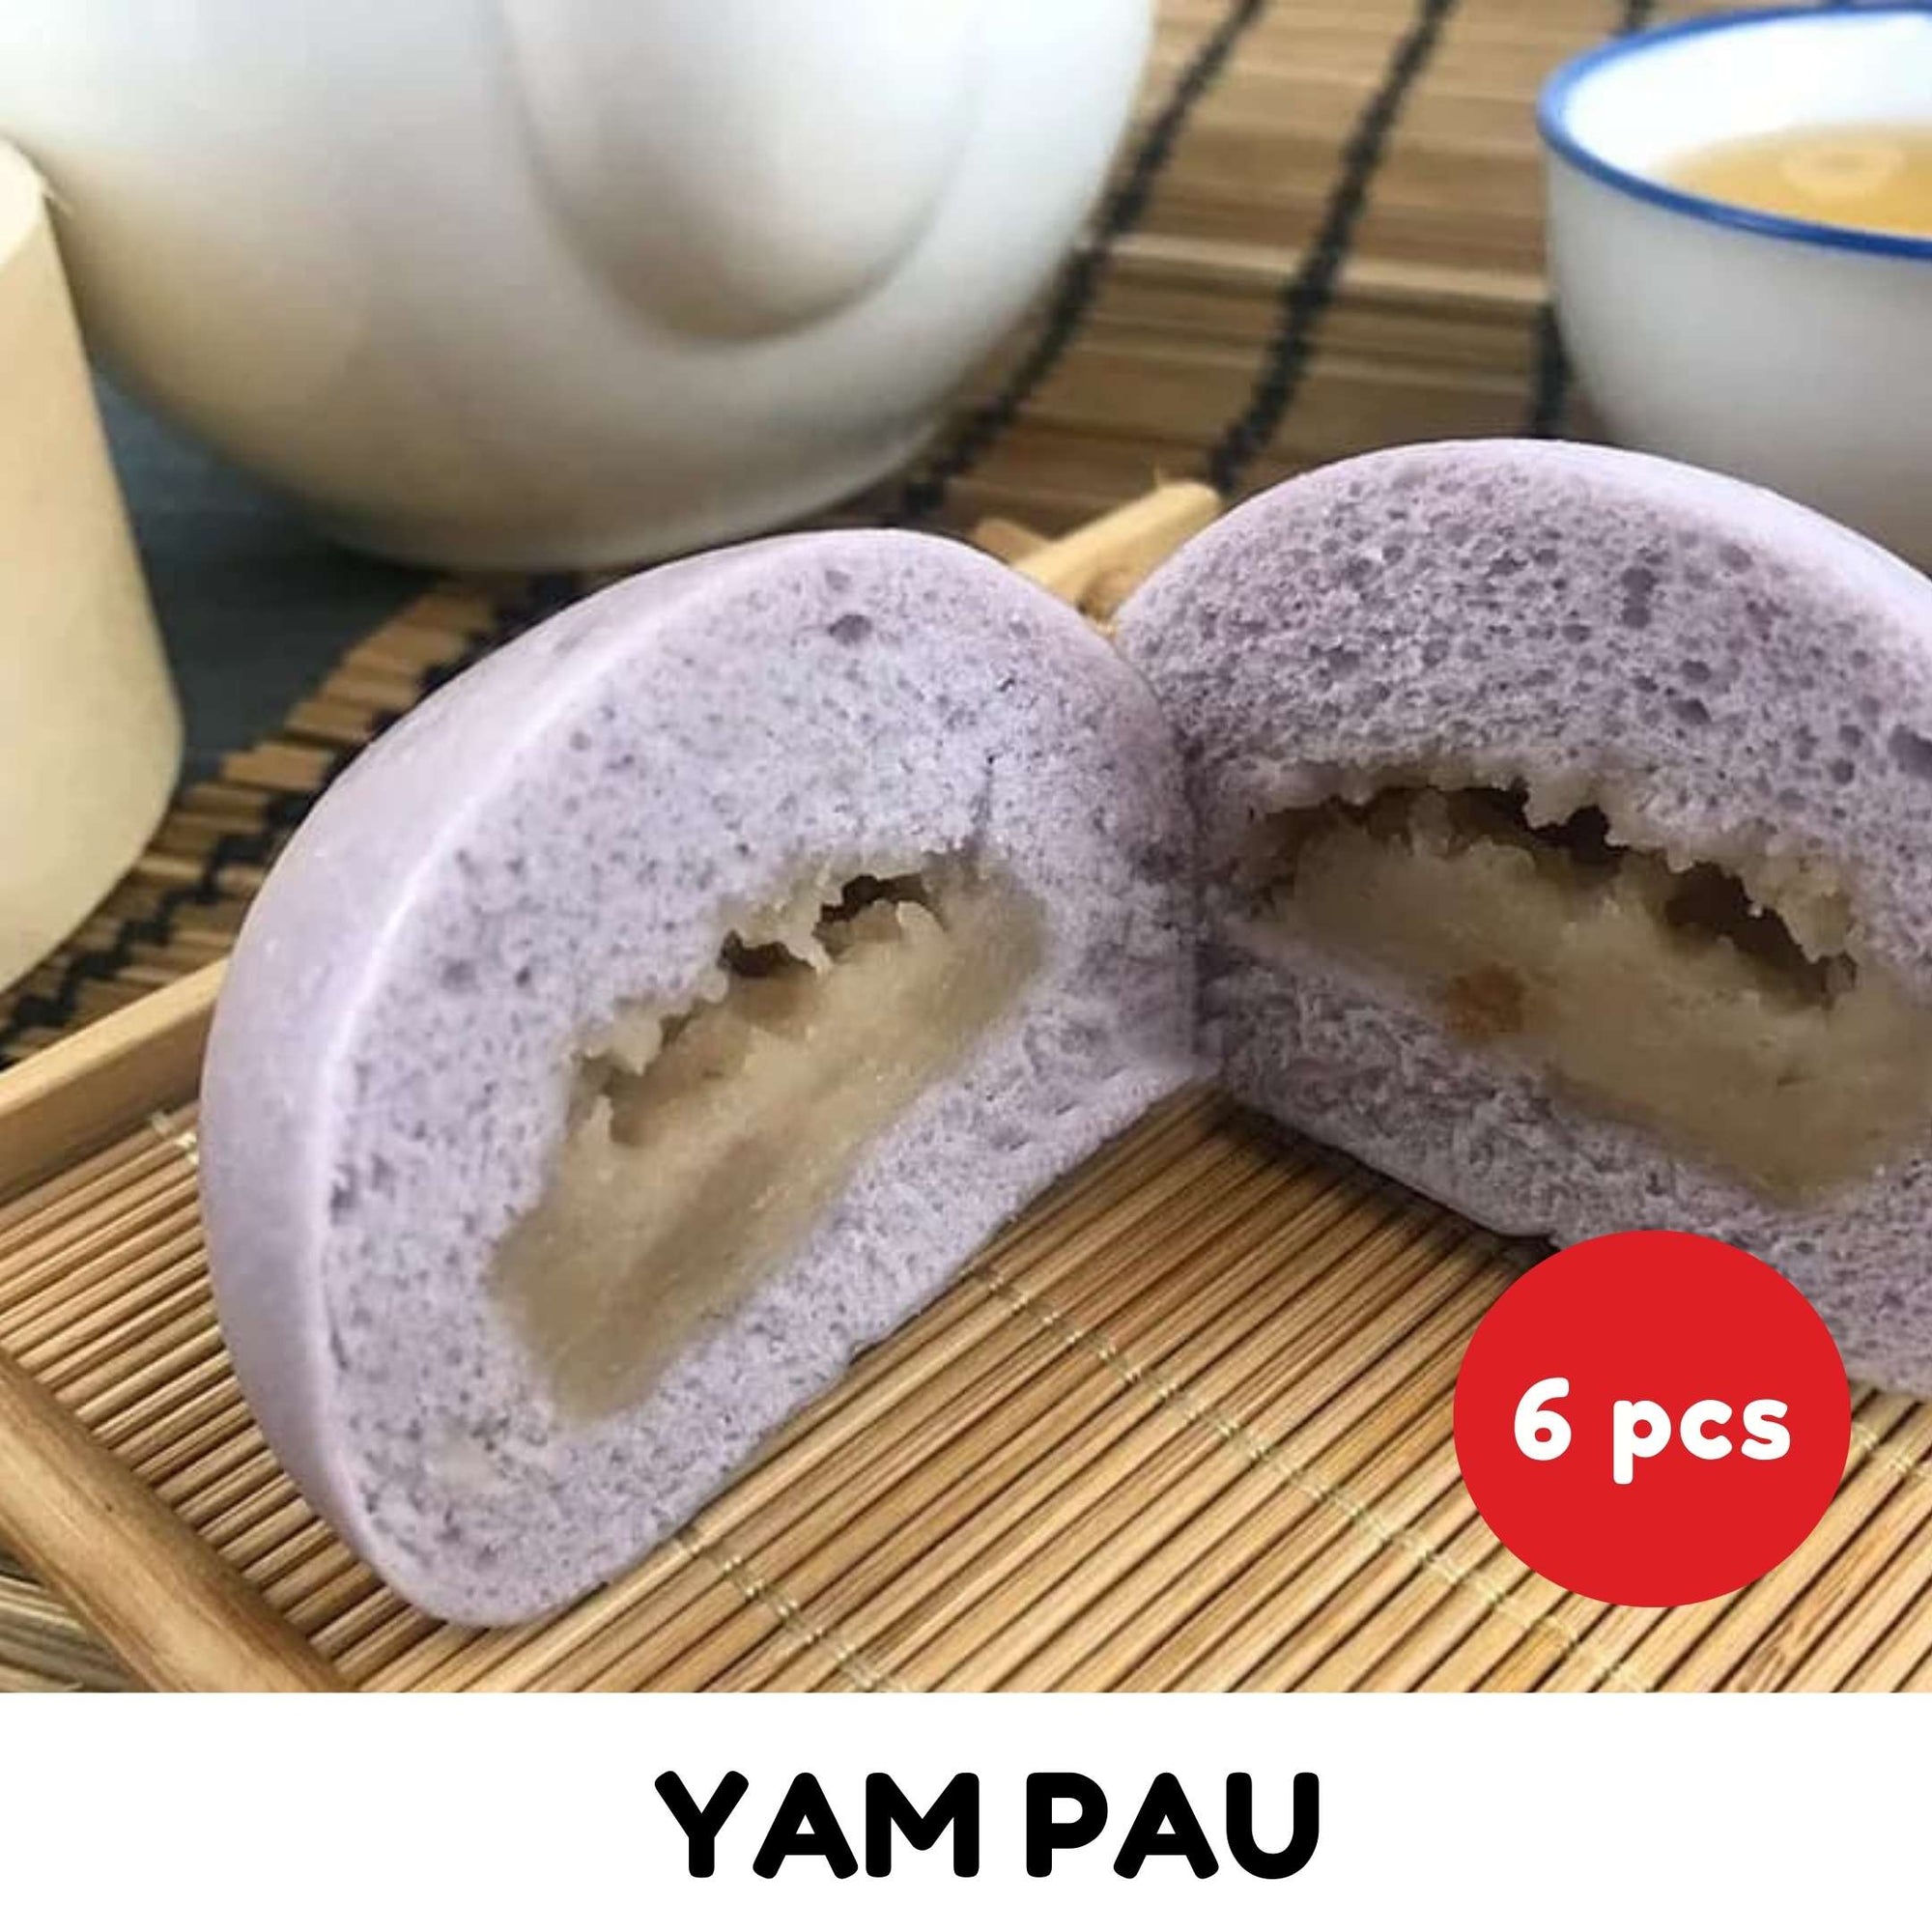 6 Pieces of Yam Pau/Yam Custard Bun